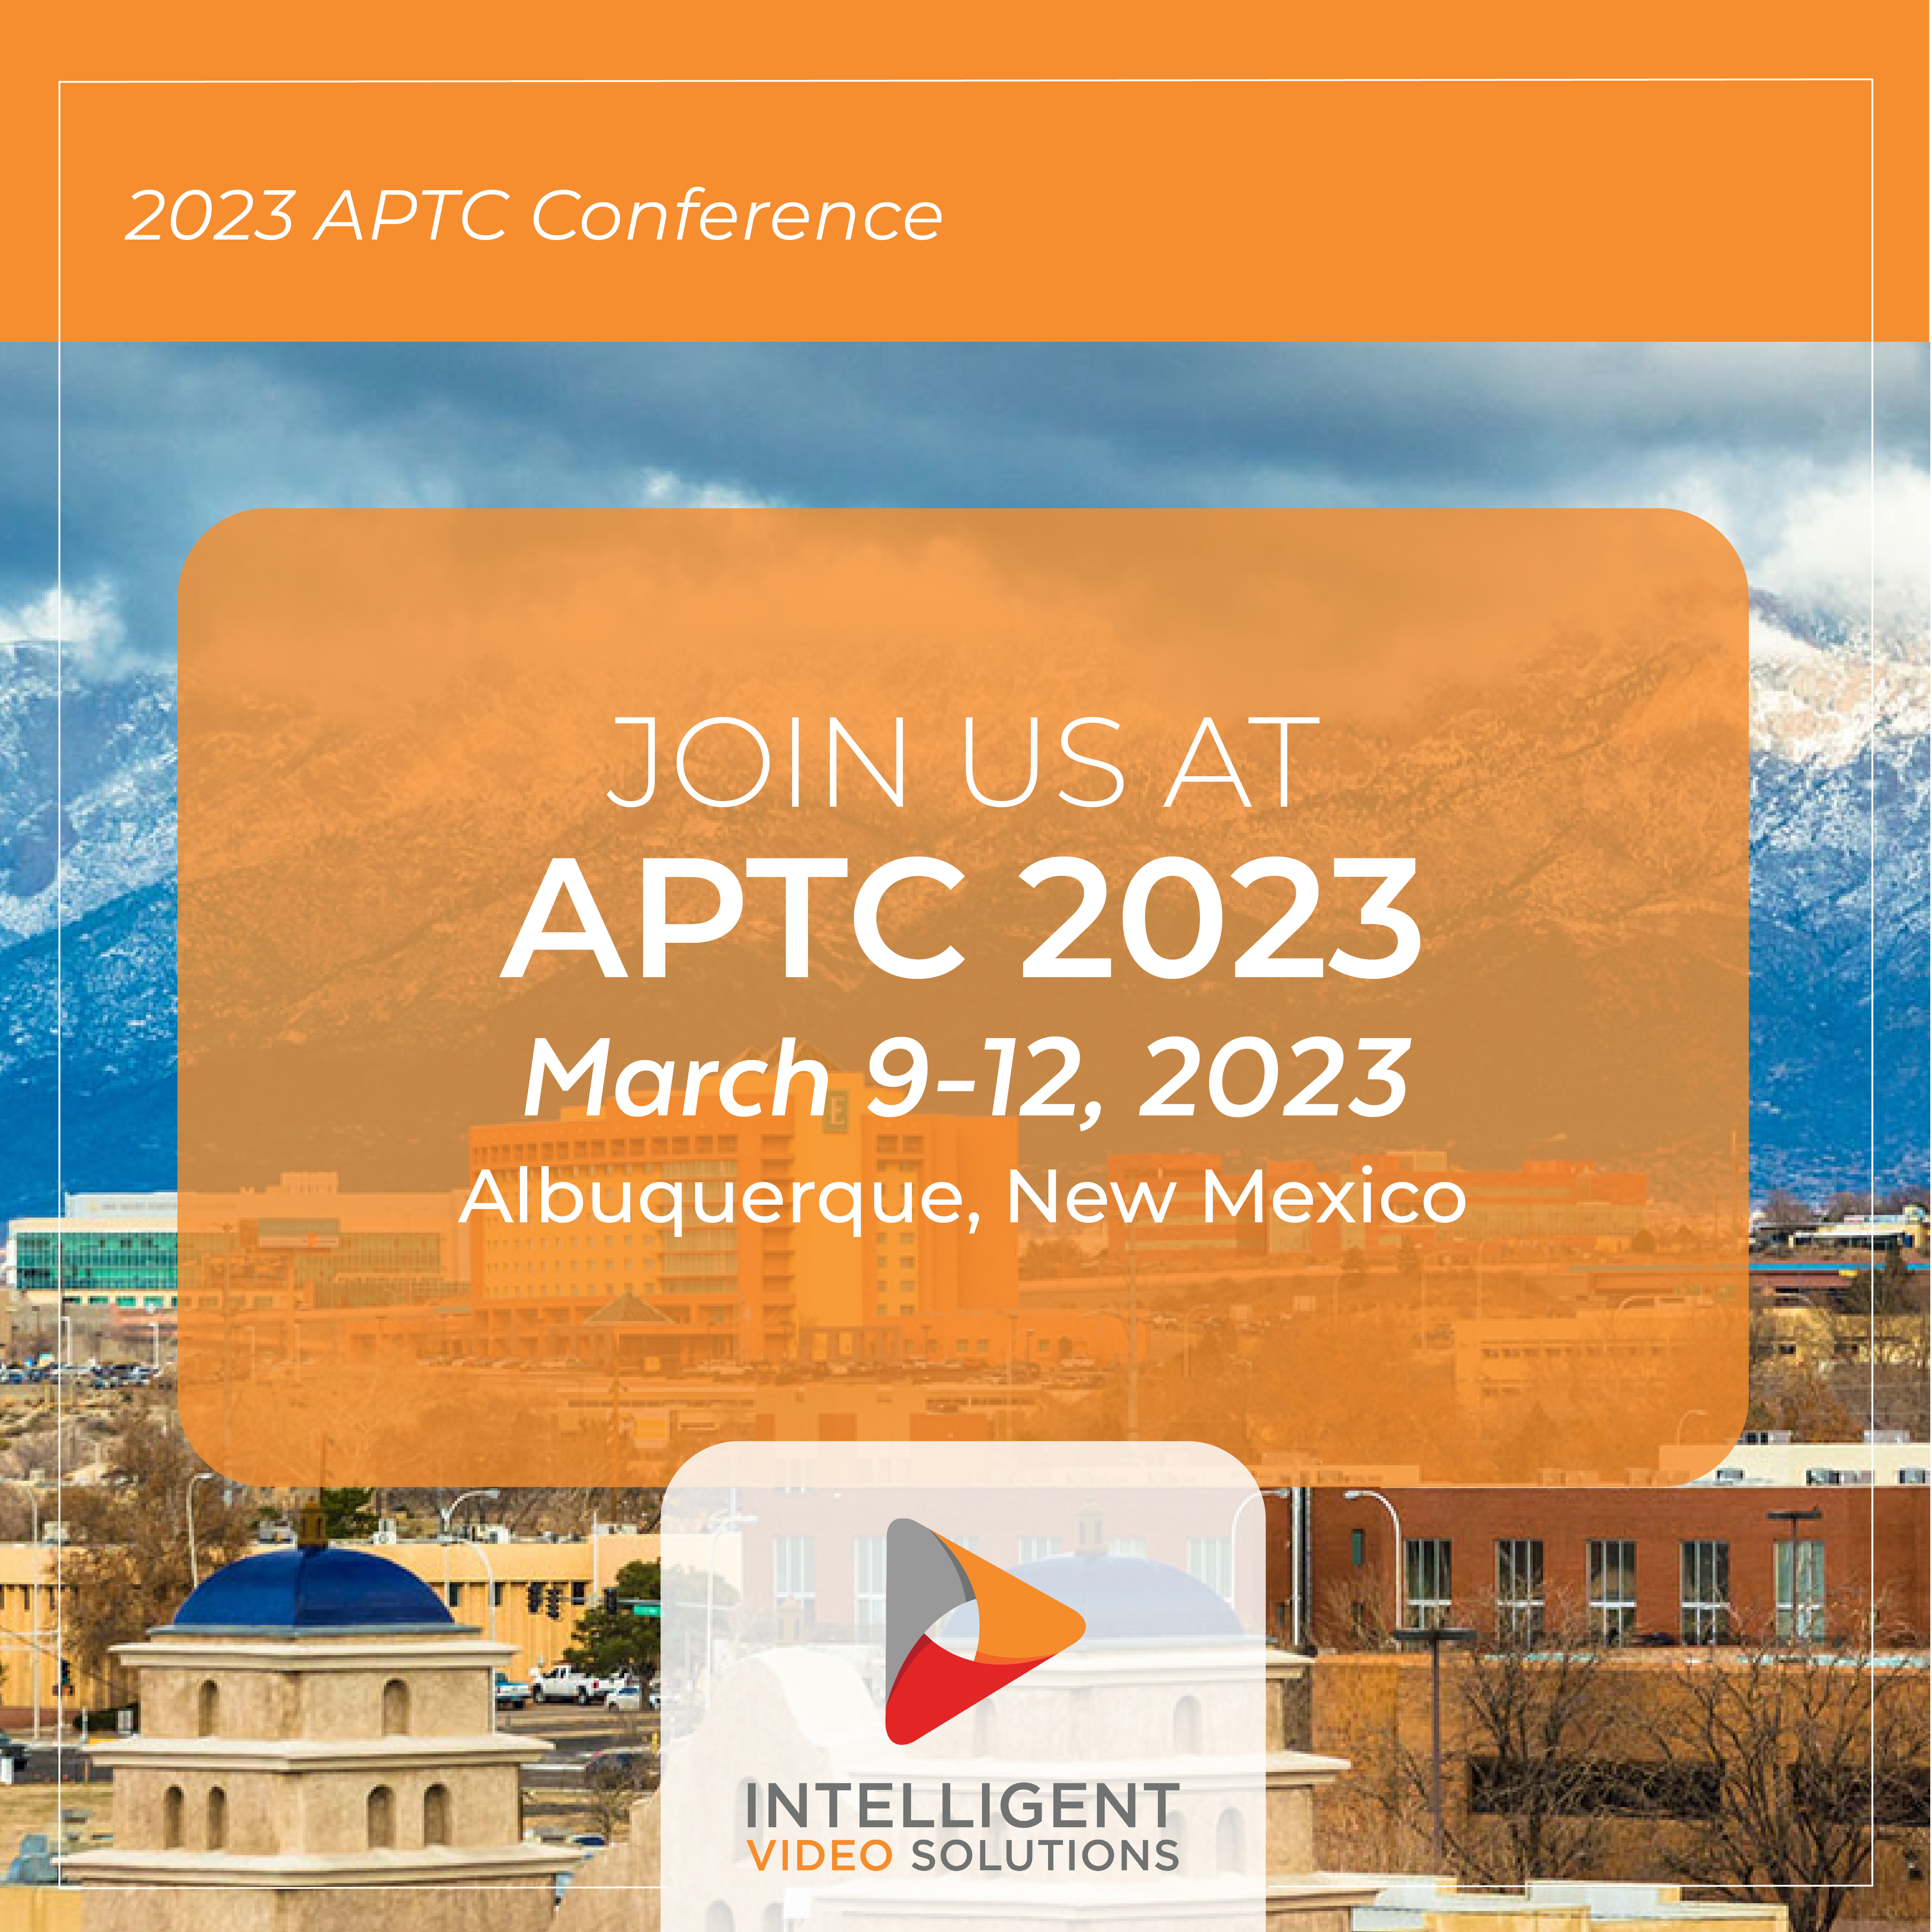 IVS to exhibit at 2023 APTC Conference in Albuquerque, New Mexico